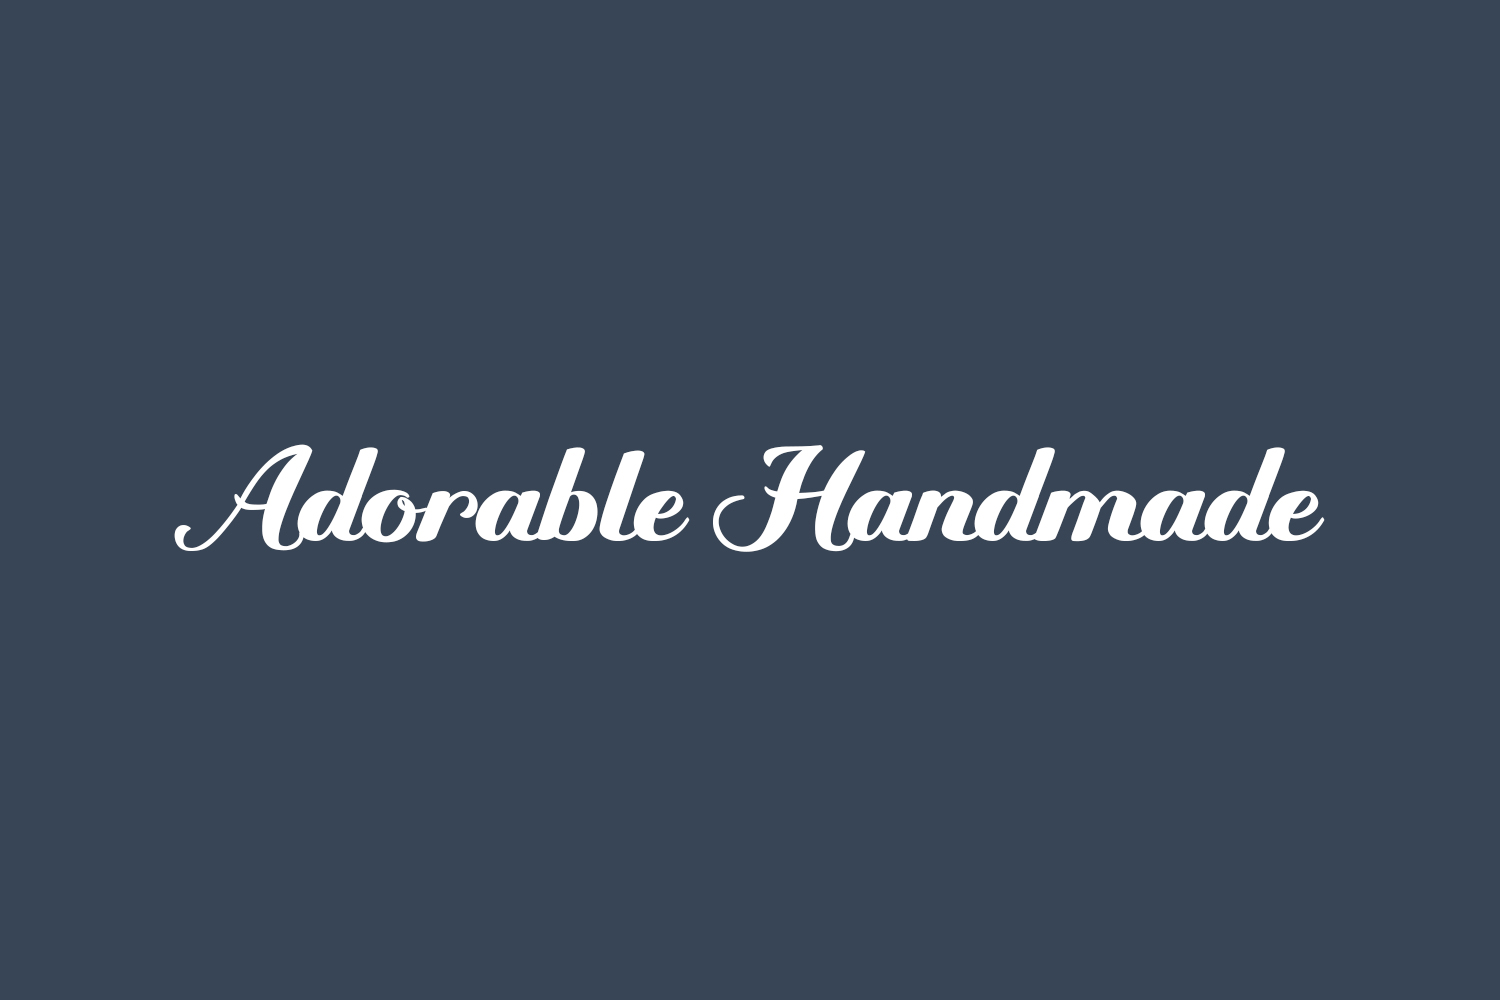 Adorable Handmade Free Font